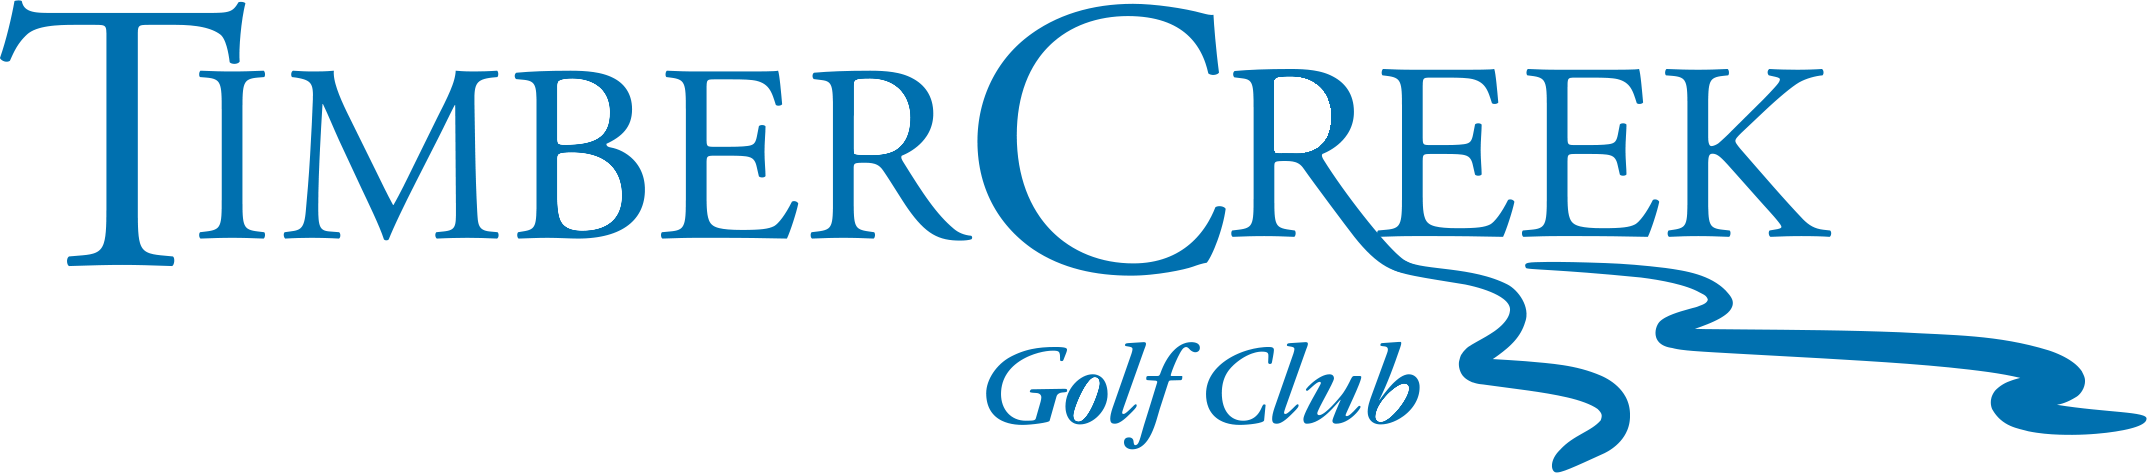 Timber Creek Golf Club